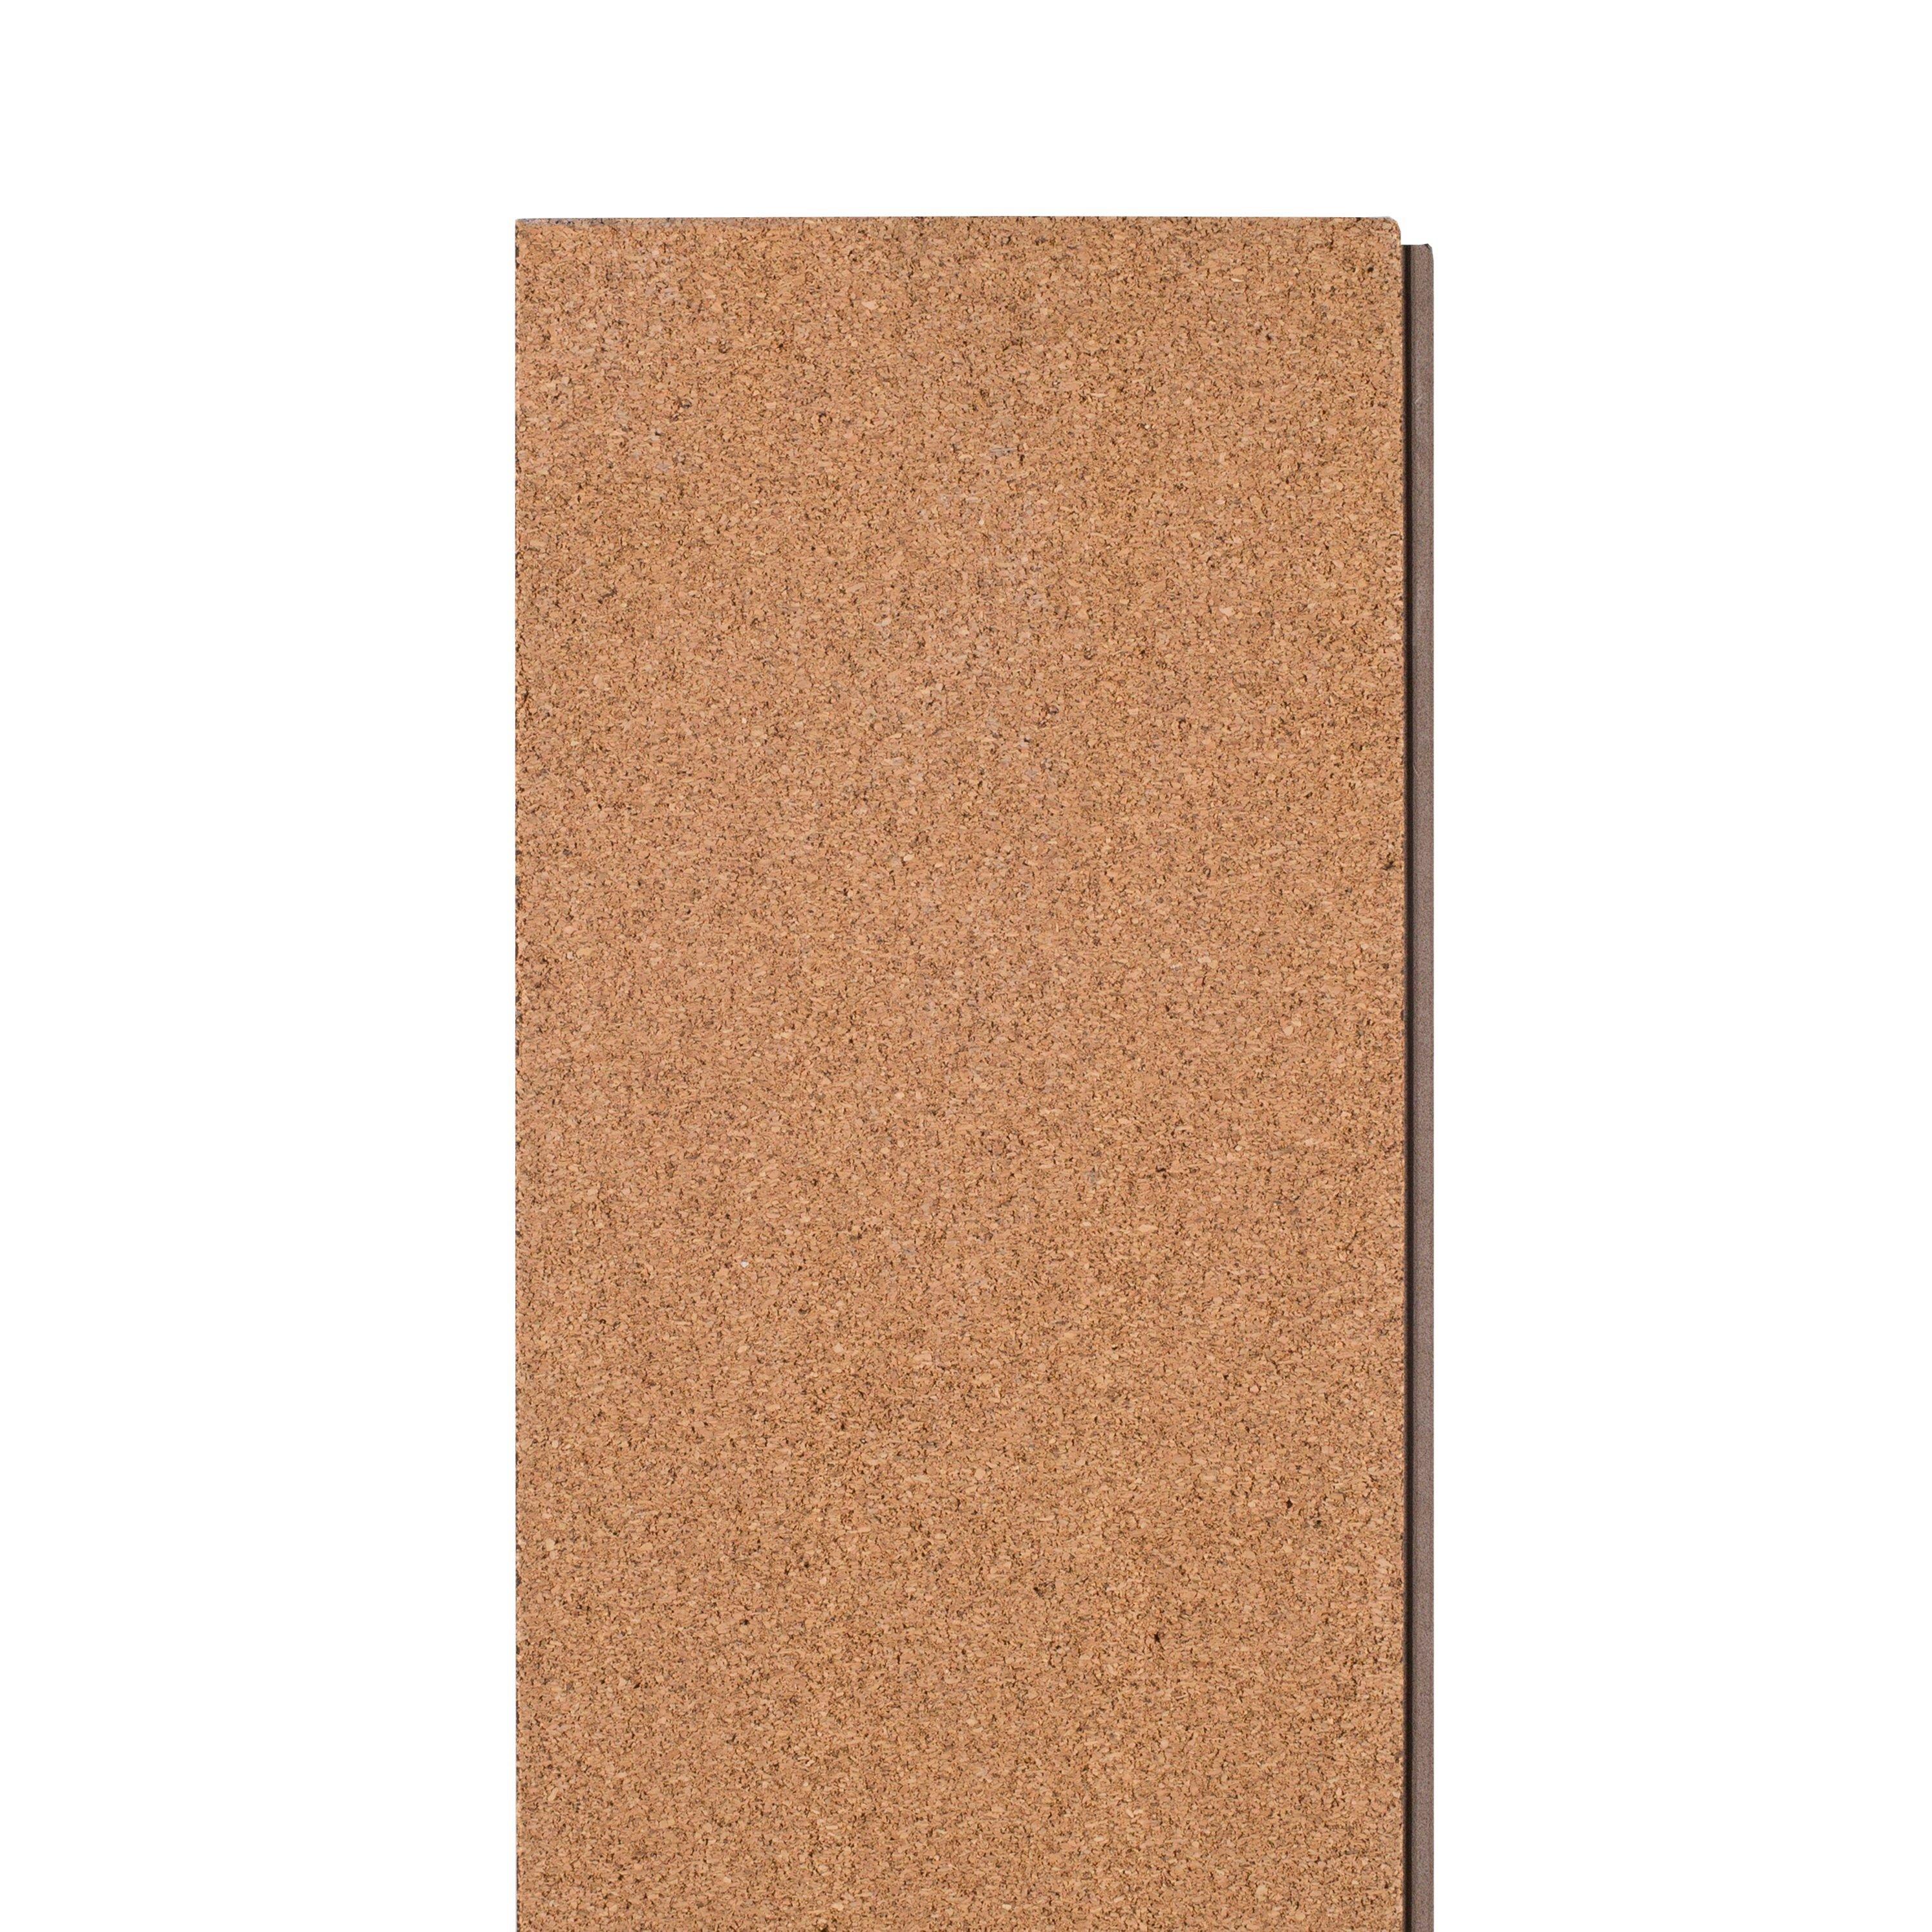 Mountain White Rigid Core Luxury Vinyl Plank - Cork Back